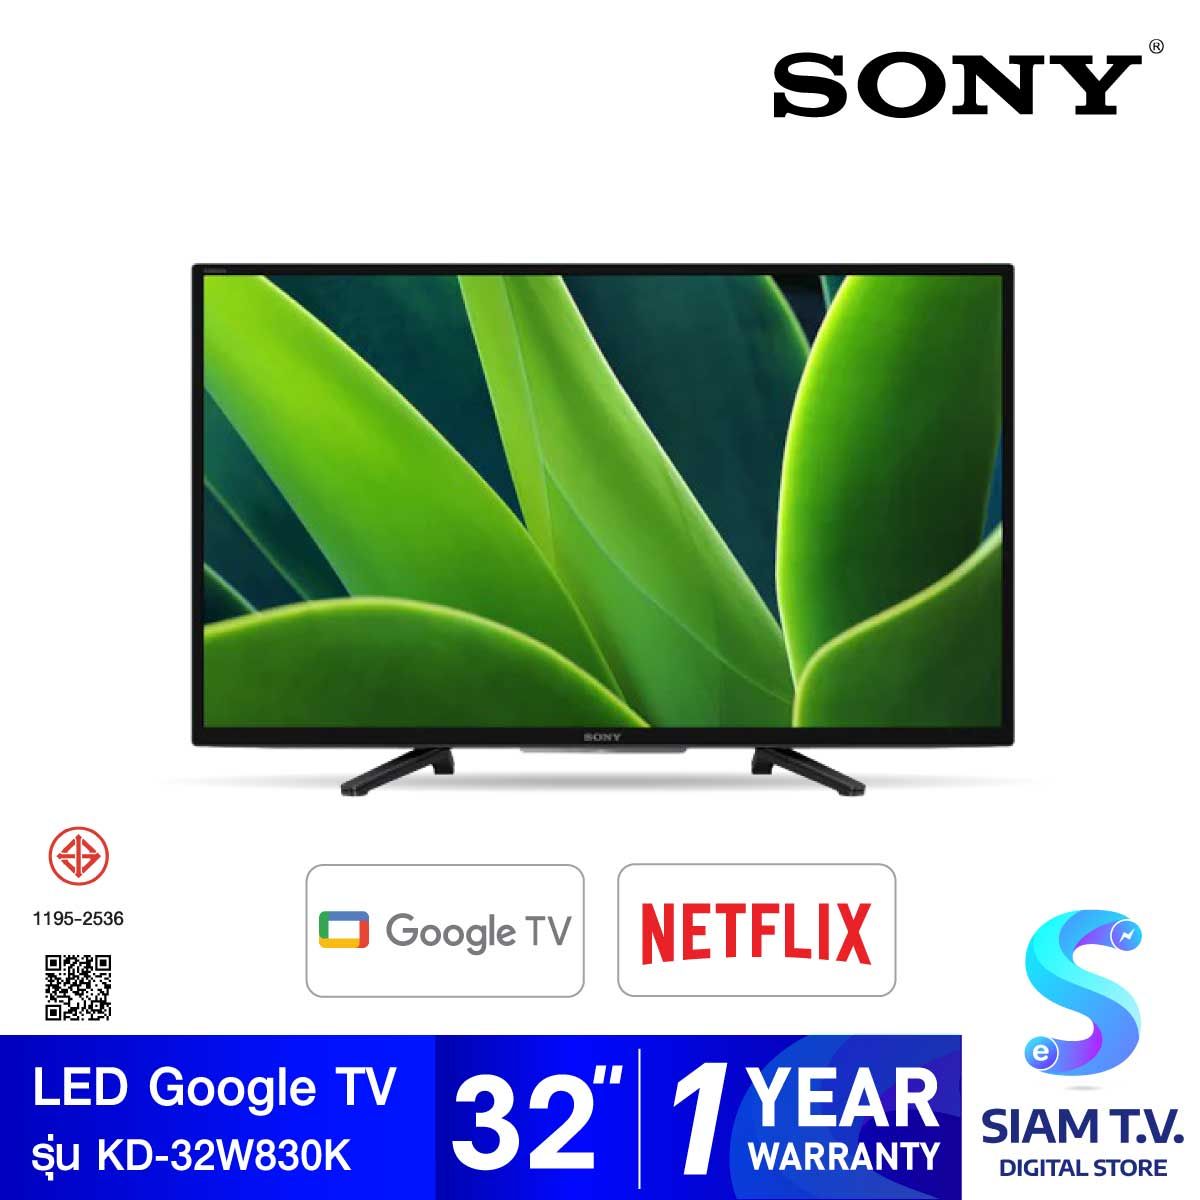 SONY BRAVIA LED GOOGLE TV  รุ่น KD-32W830K สมาร์ททีวี 32 นิ้ว